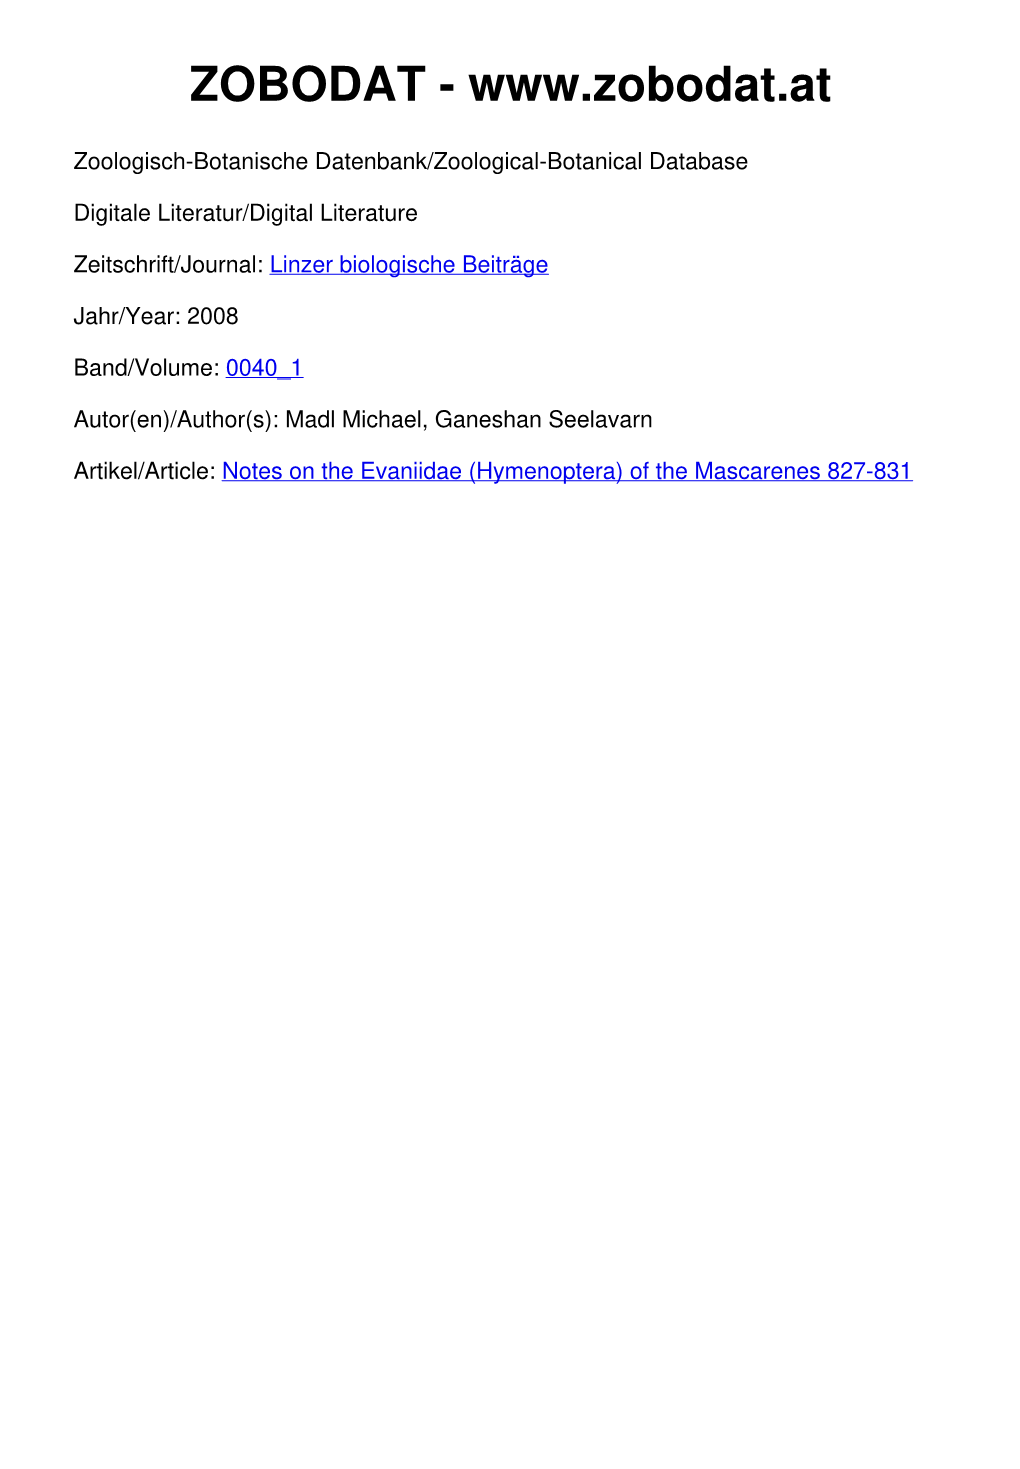 Notes on the Evaniidae (Hymenoptera) of the Mascarenes 827-831 ©Biologiezentrum Linz, Austria, Download Unter